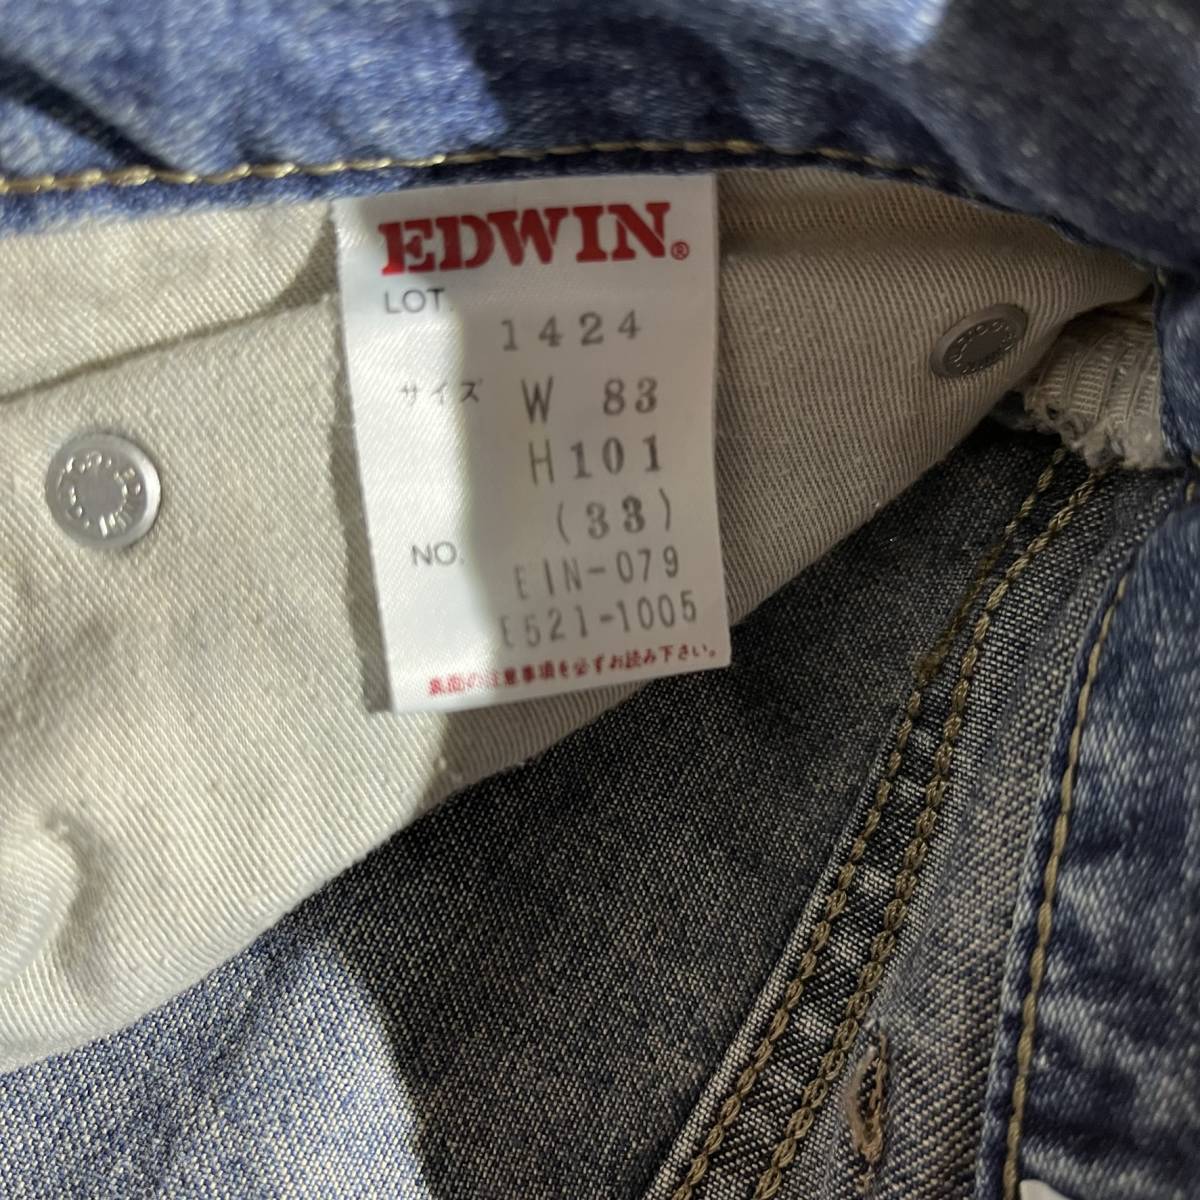 【EDWIN】エドウィン ヴィンテージ デニムパンツ ルーズストレート 日本製 424 33インチ_画像5